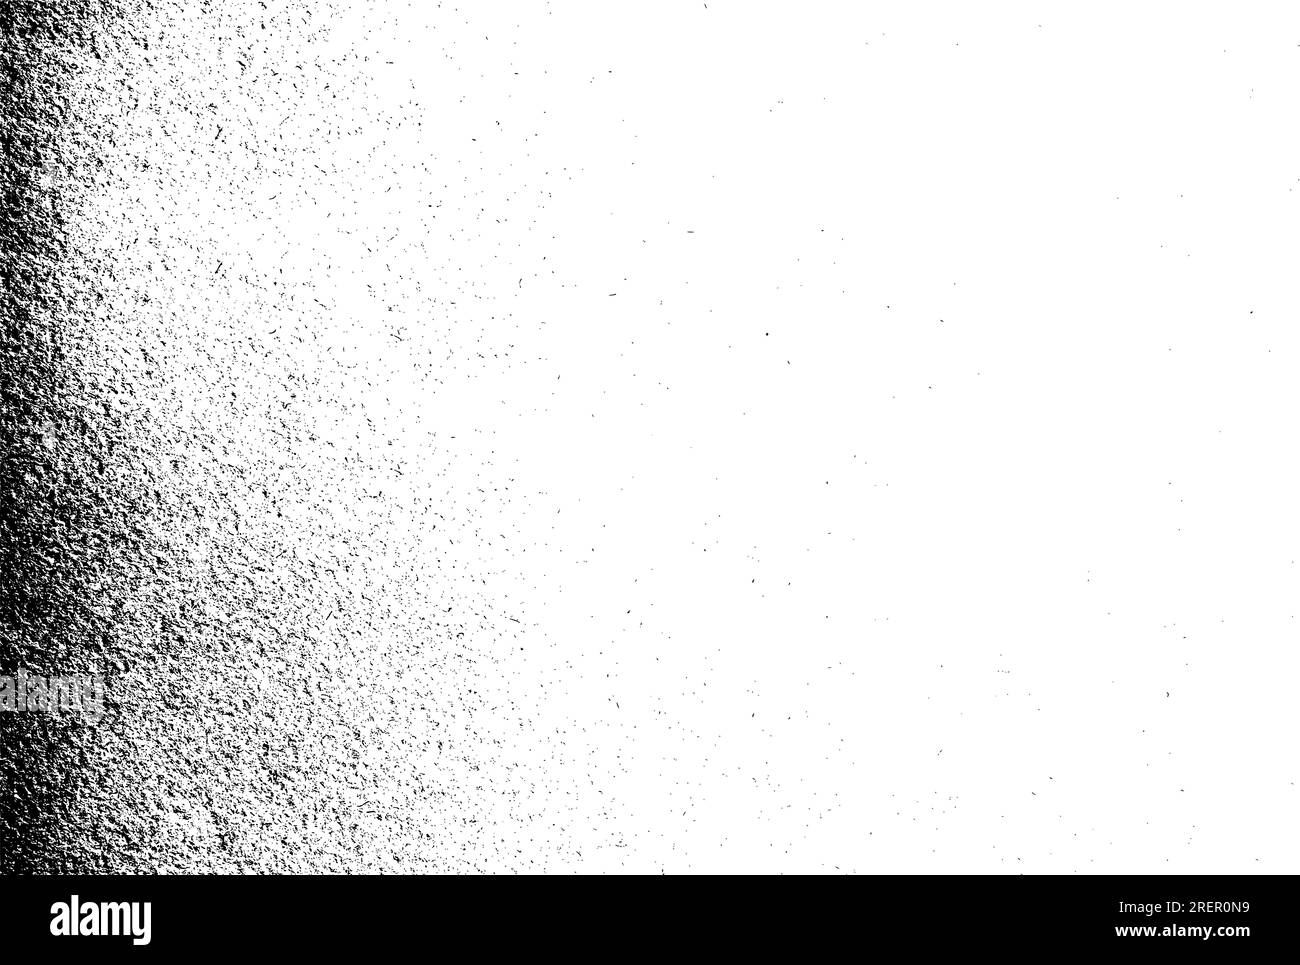 Gritty grain texture. Random speckles or specks noise paper. Retro grunge granular vector illustration Stock Vector